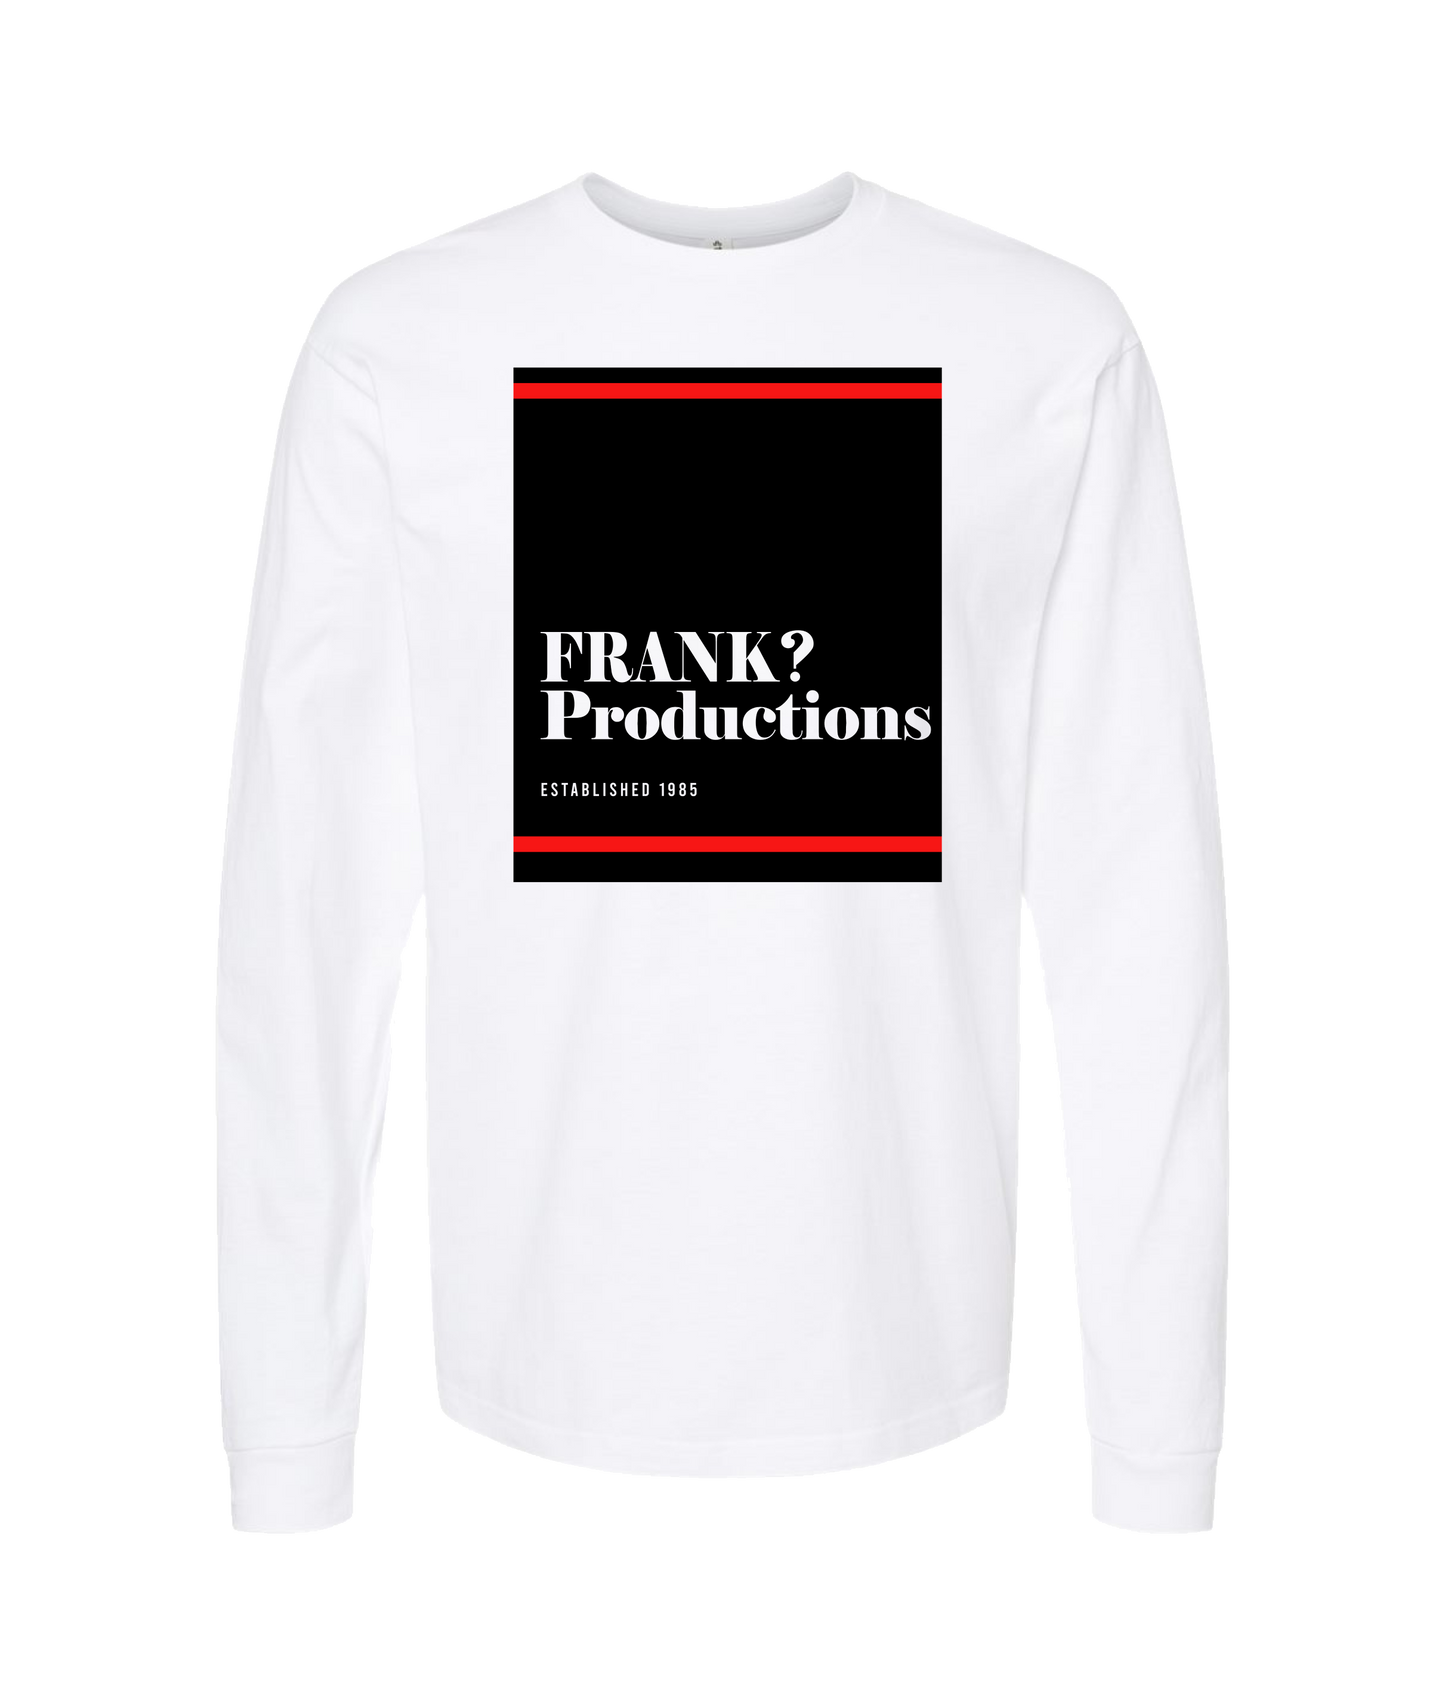 FRANK? Piccolella - Established 1985 - White Long Sleeve T